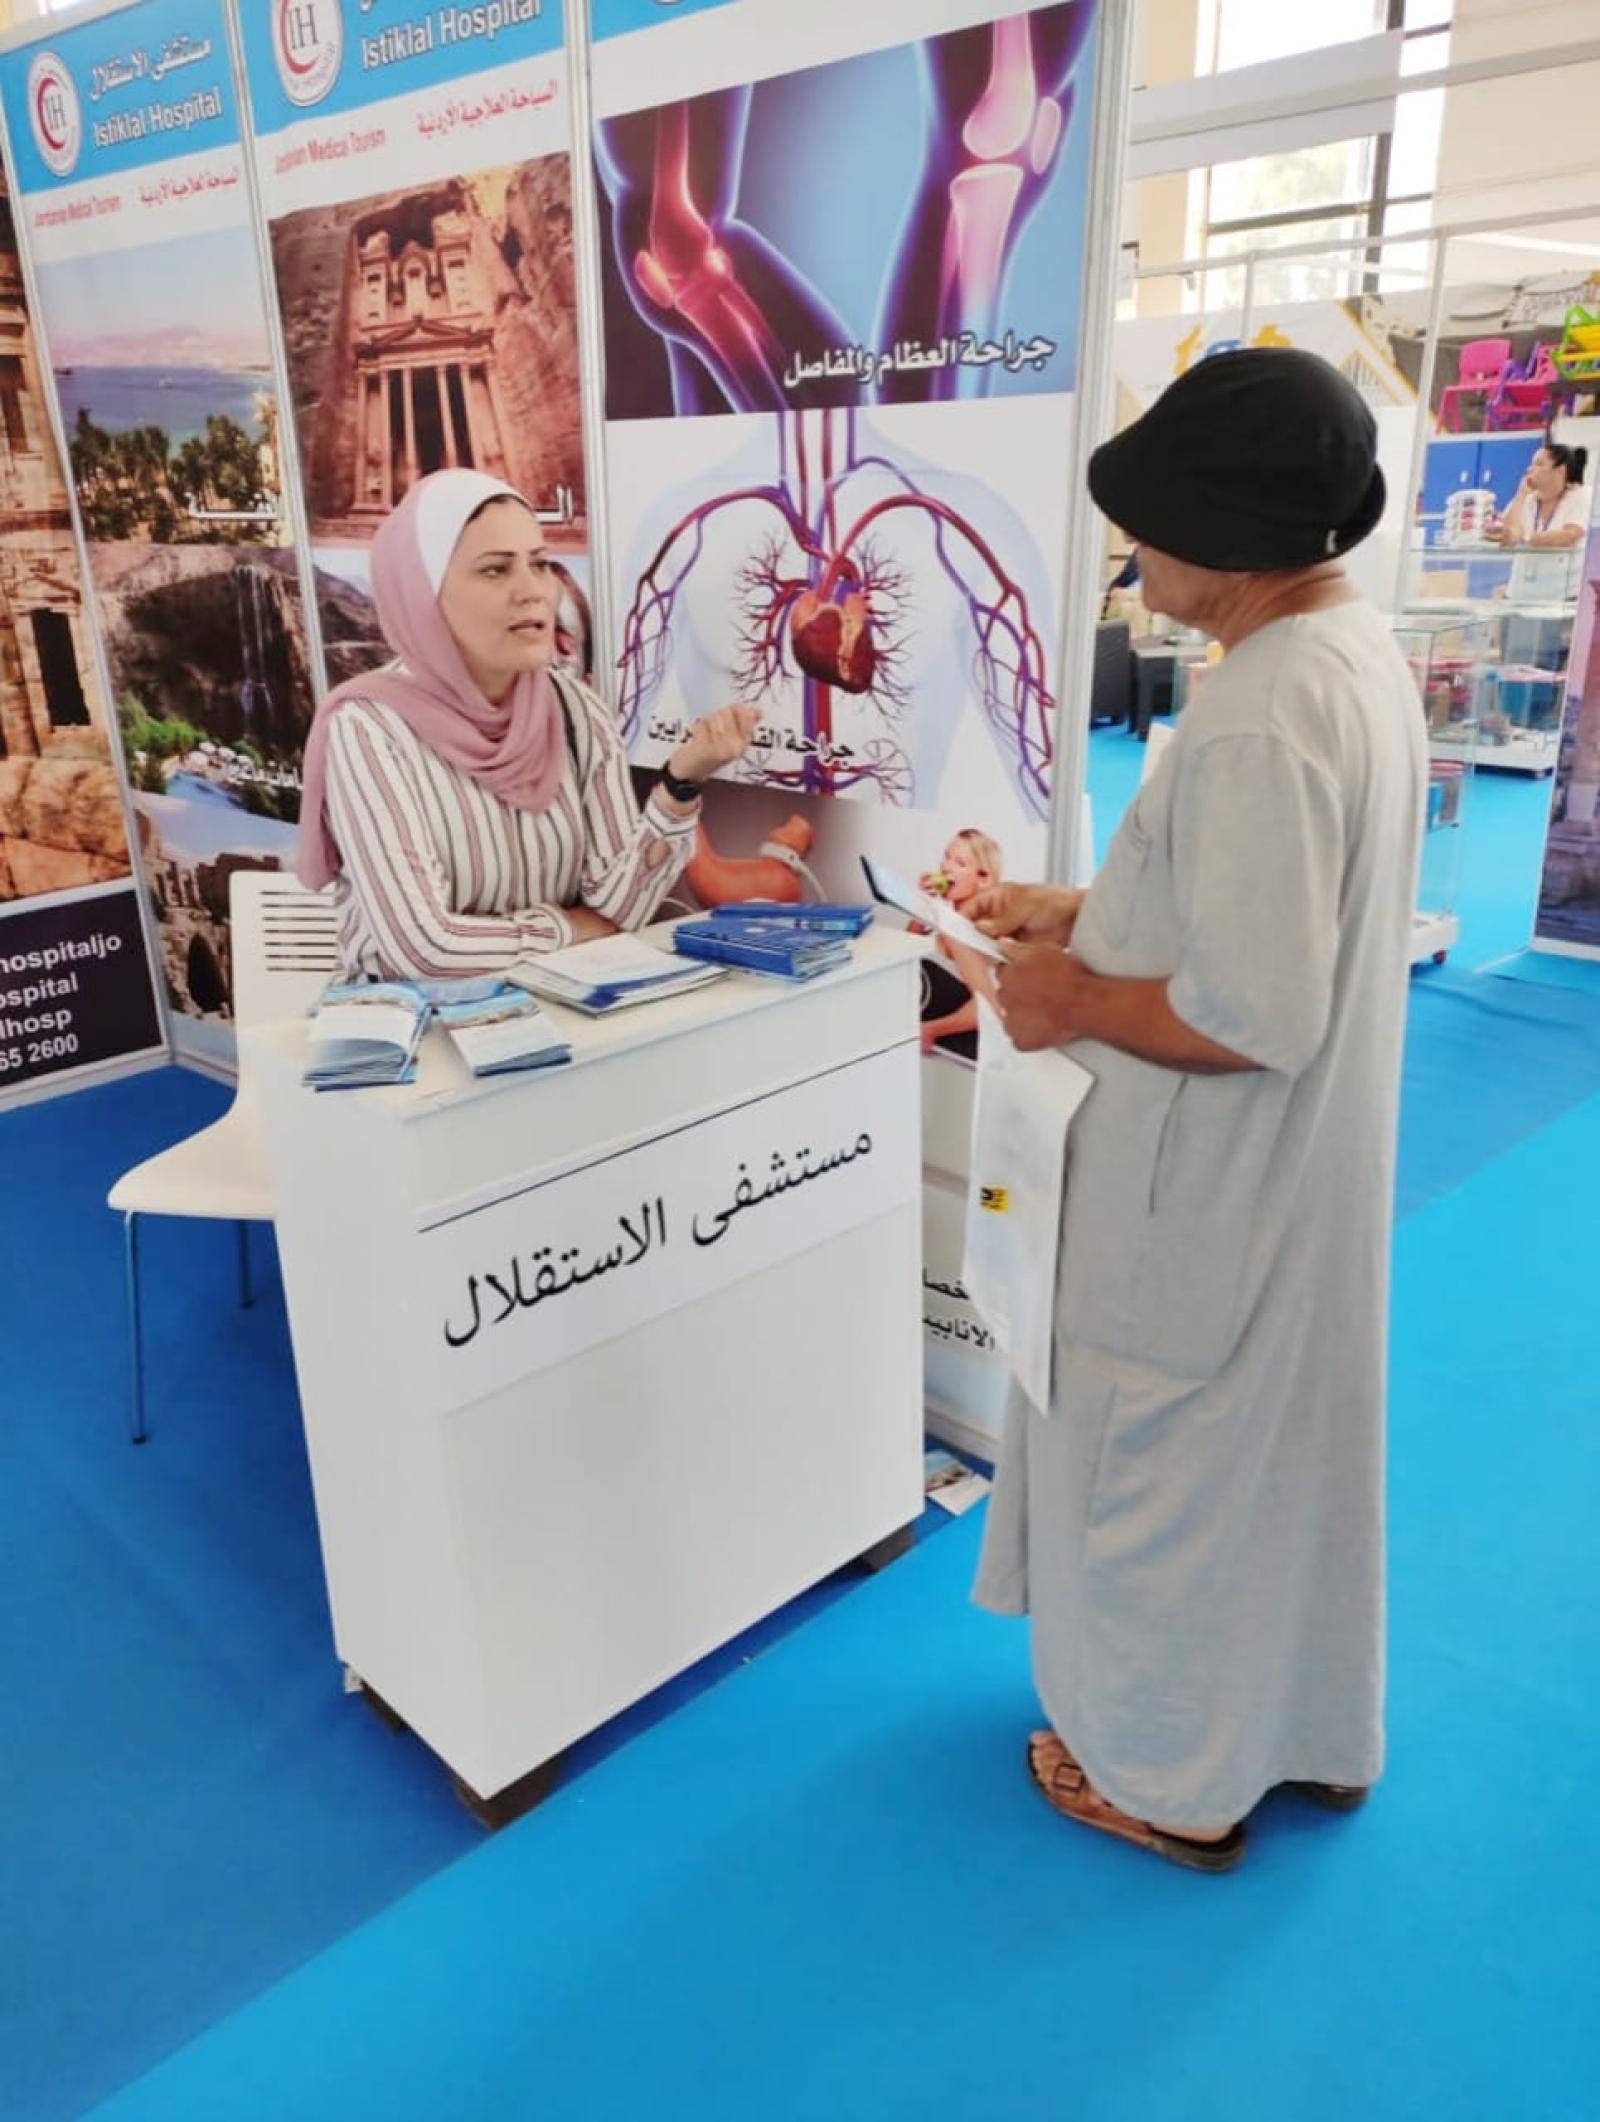 Istiklal Hospital participates in Algeria International Fair